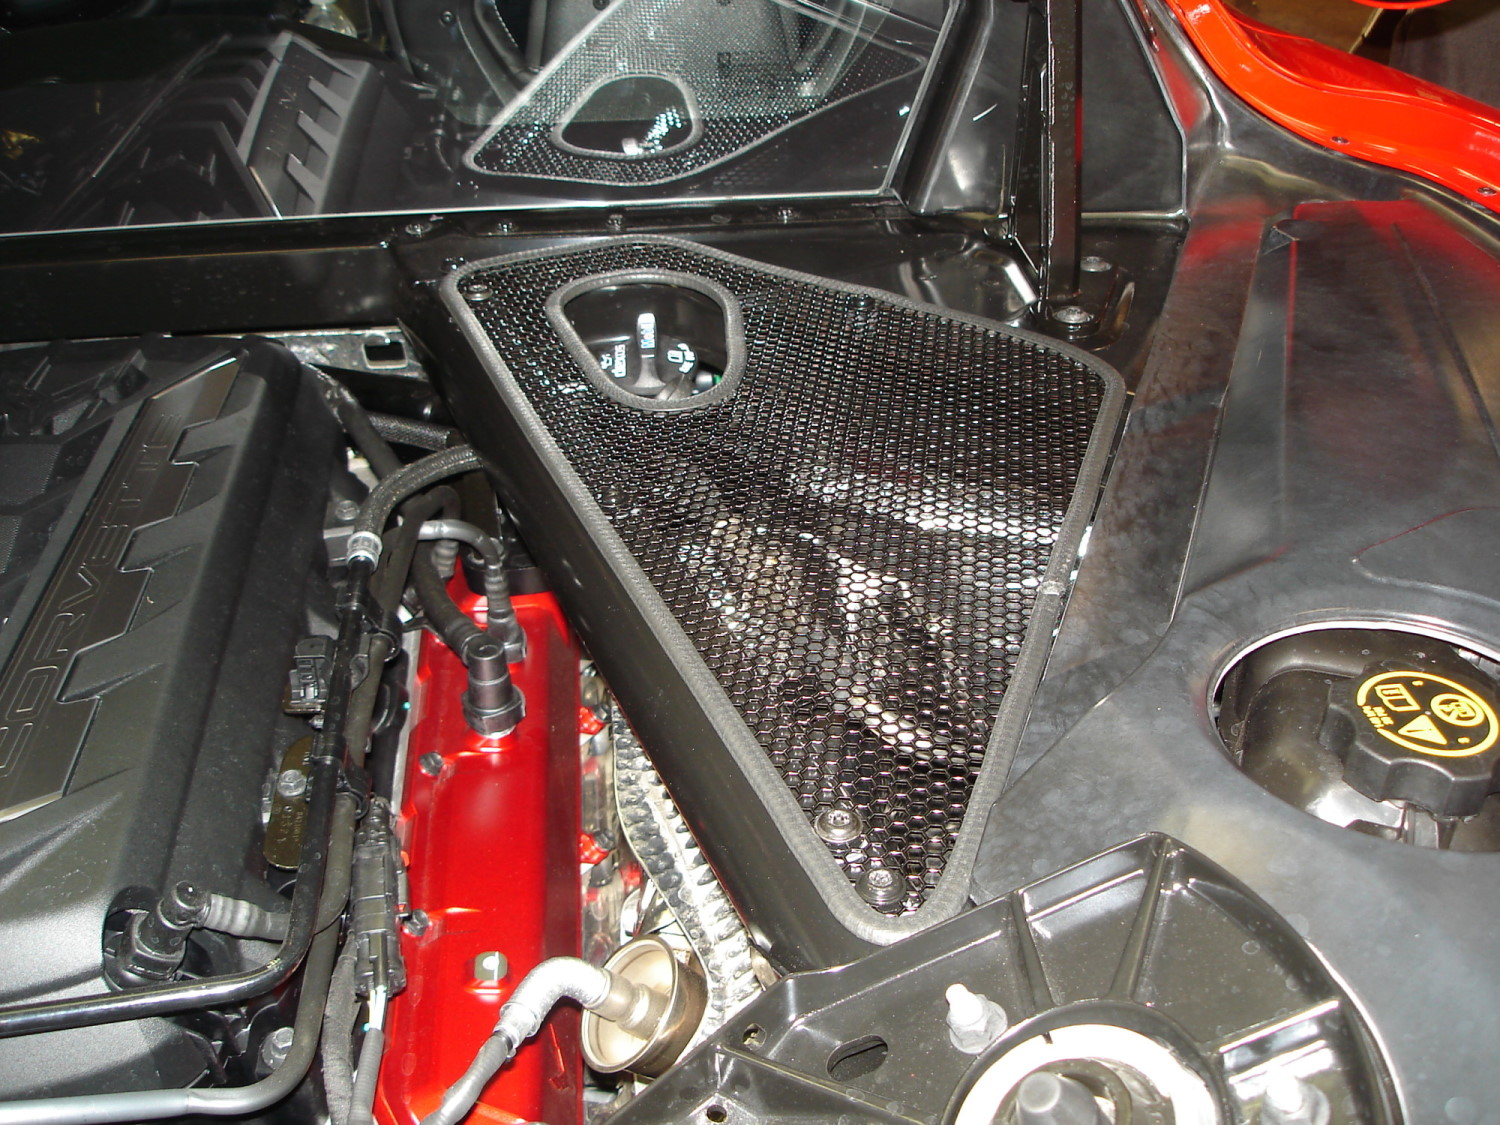 2020 - 2022 Chevy Corvette C8 Mesh Engine Covers #3